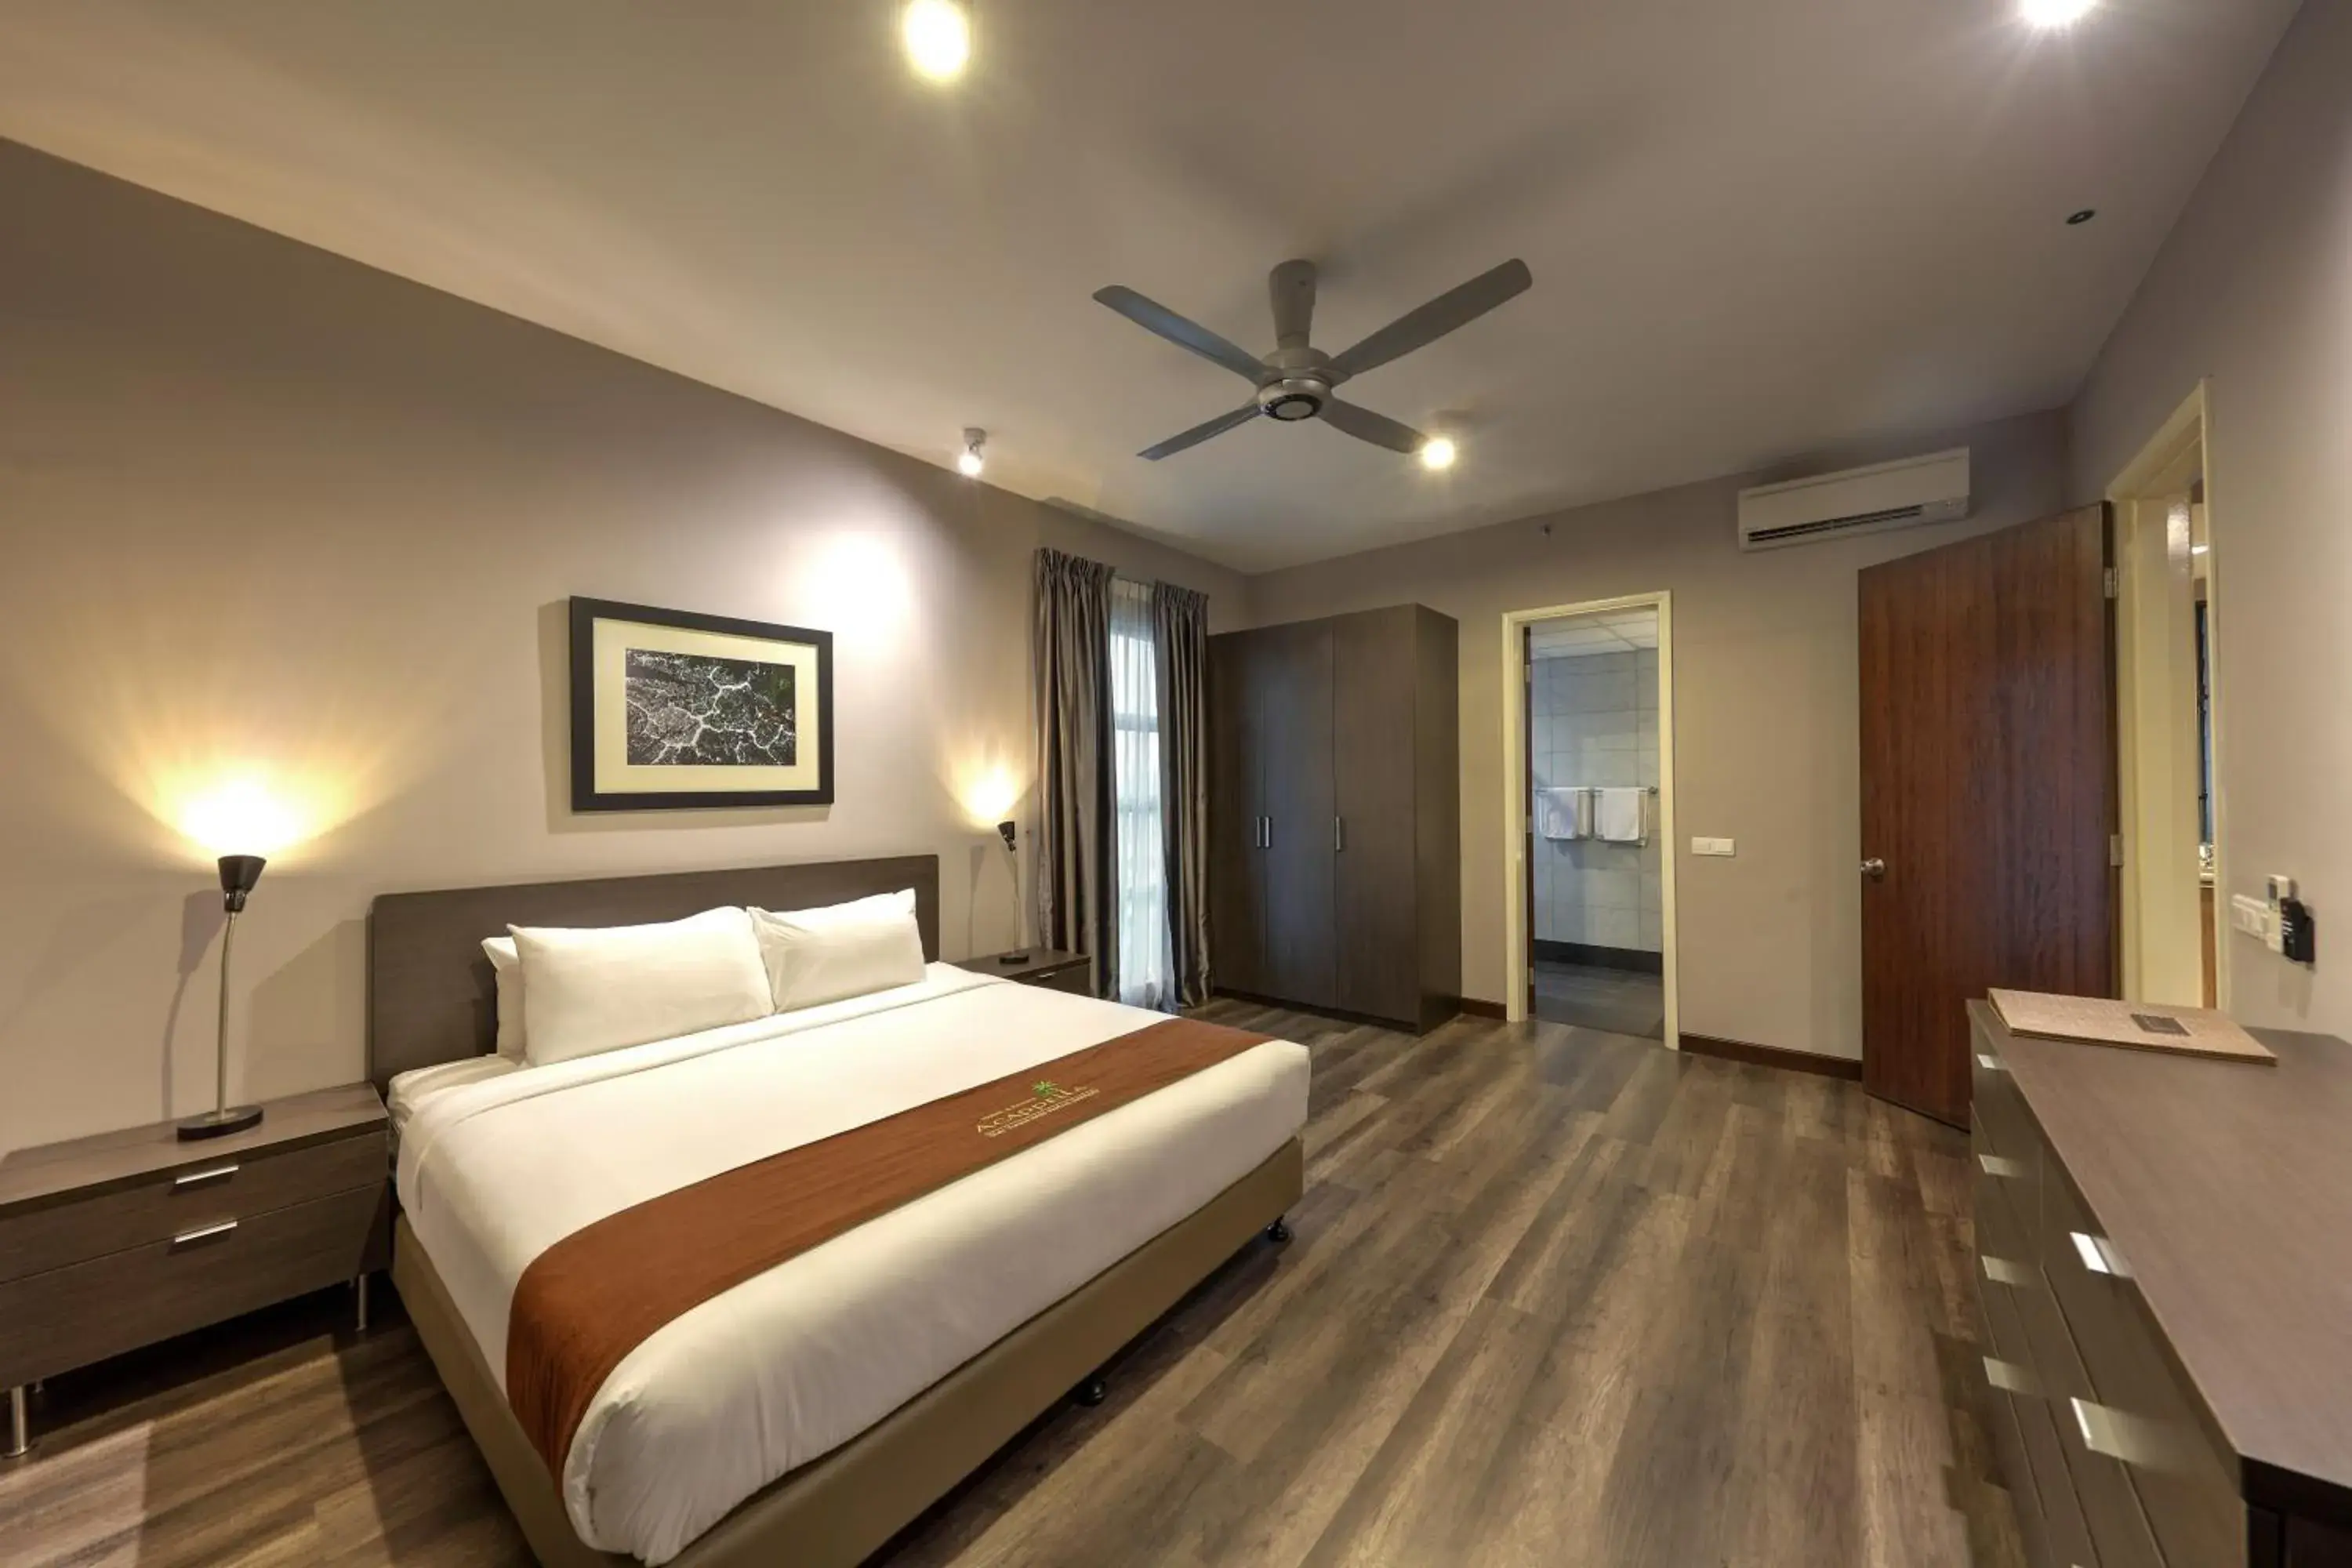 Premier King Suite in Acappella Suite Hotel, Shah Alam